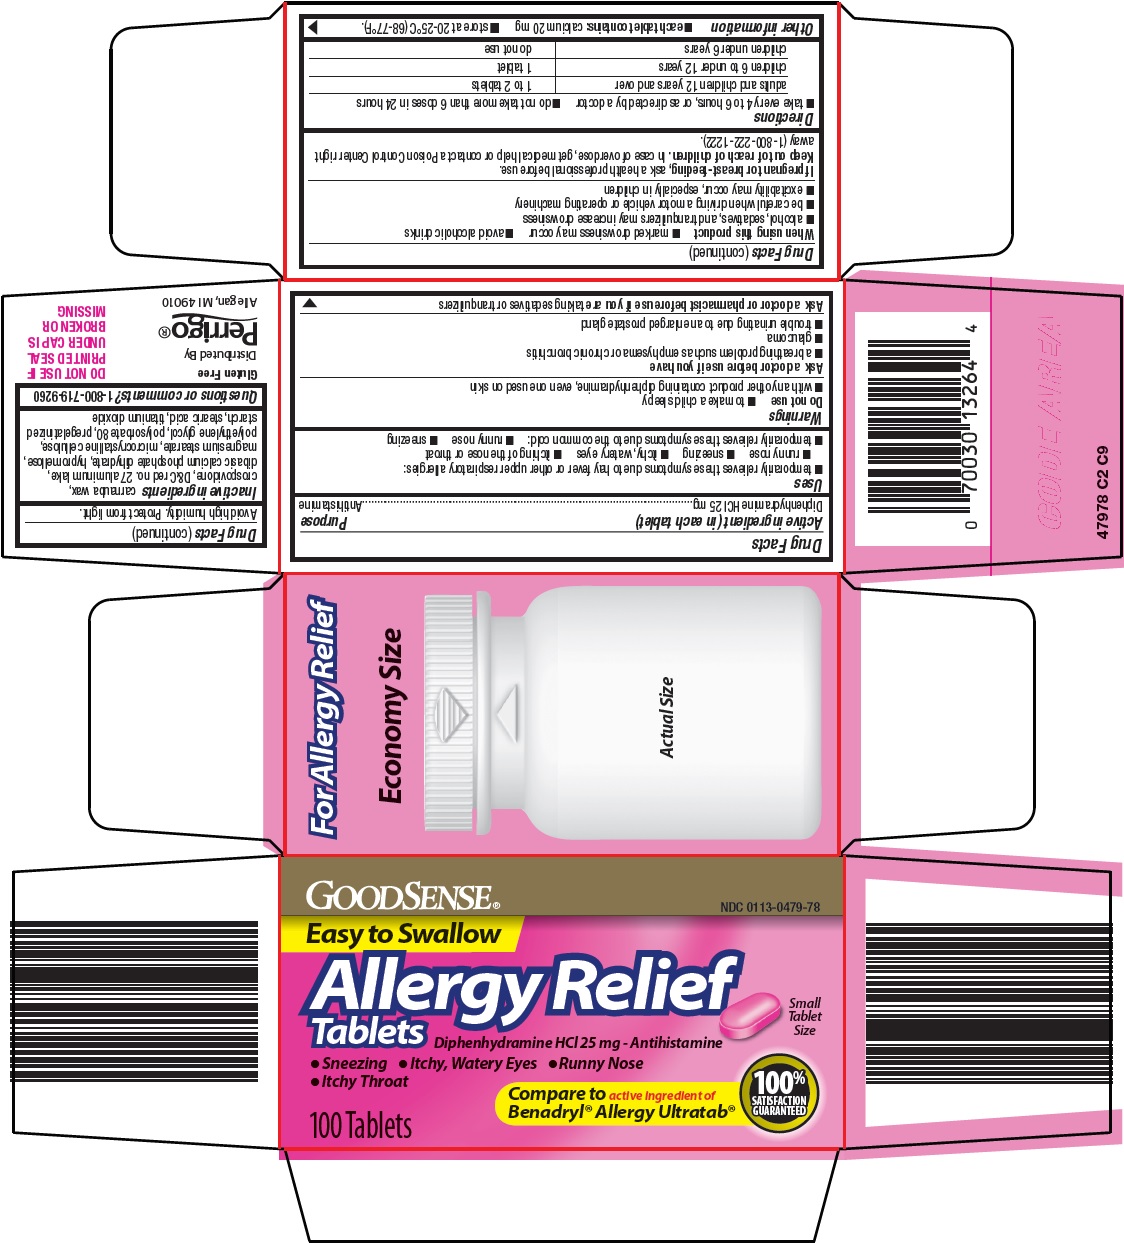 479-c2-allergy-relief-tablets.jpg